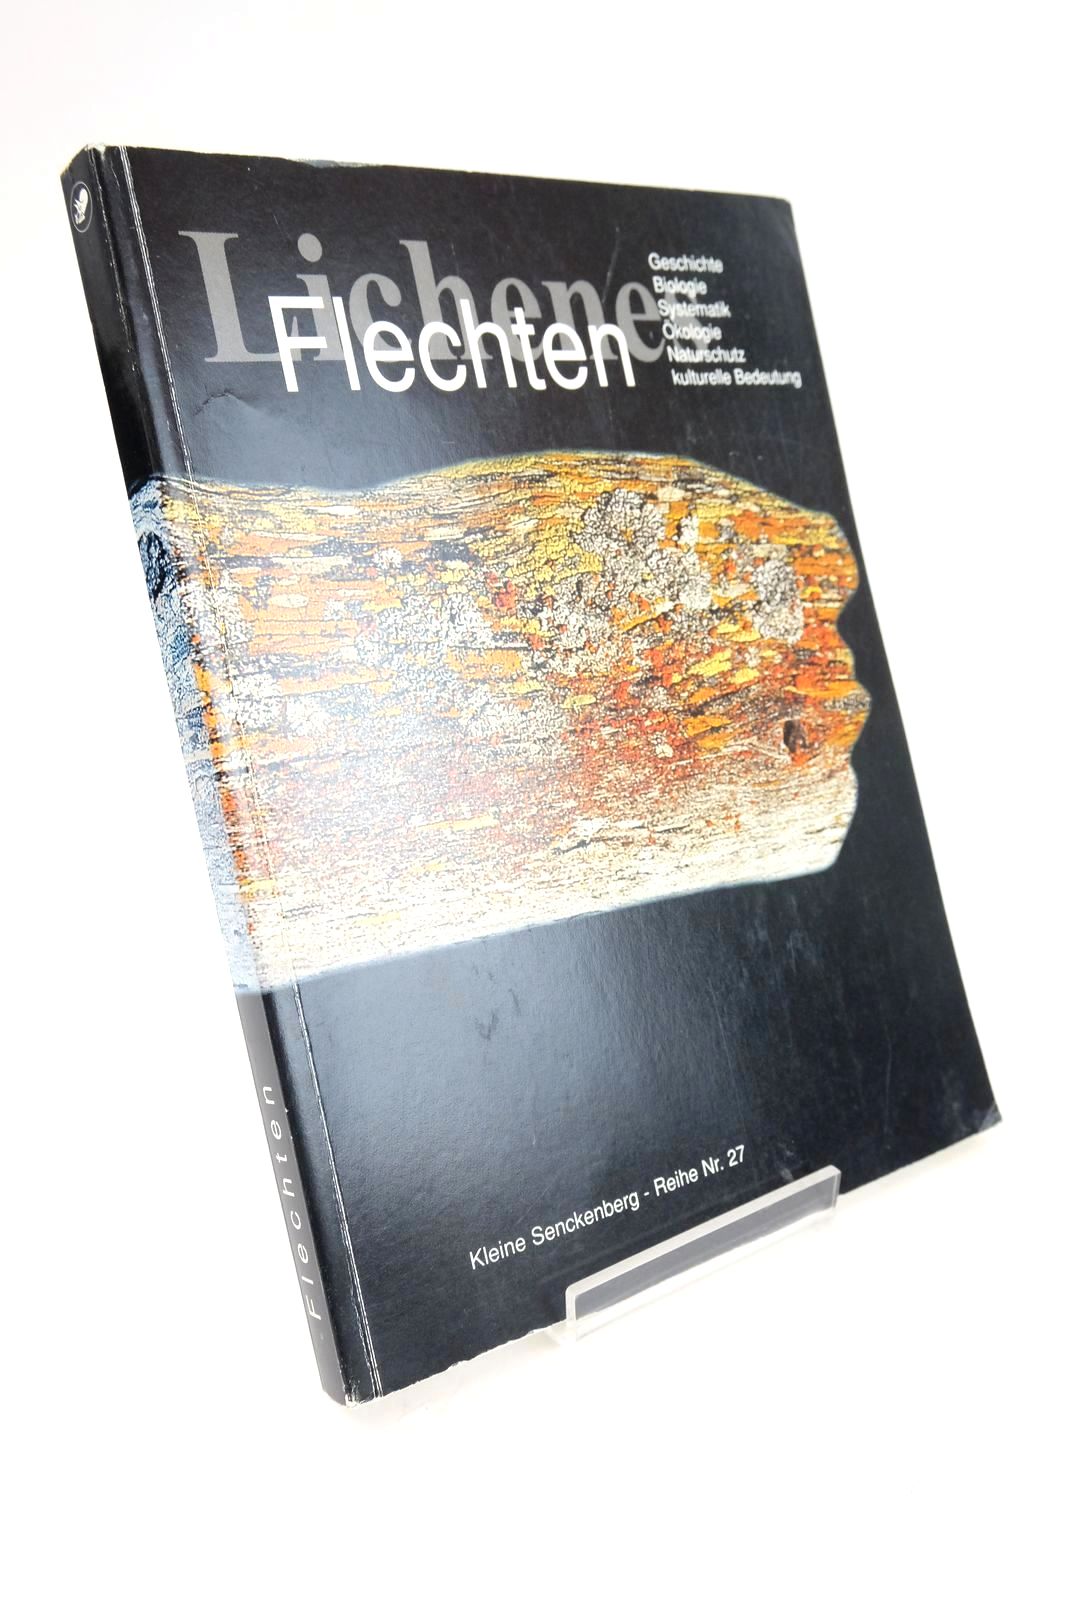 Photo of FLECHTEN: GESCHICHTE, BIOLOGIE, SYSTEMATIK, OKOLOGIE, NATURSCHUTZ UND KULTURELLE BEDEUTUNG written by Budel, Burkhard Flachsmann, Selina Frey, Beat et al, published by Verlag Waldemar Kramer (STOCK CODE: 1324740)  for sale by Stella & Rose's Books